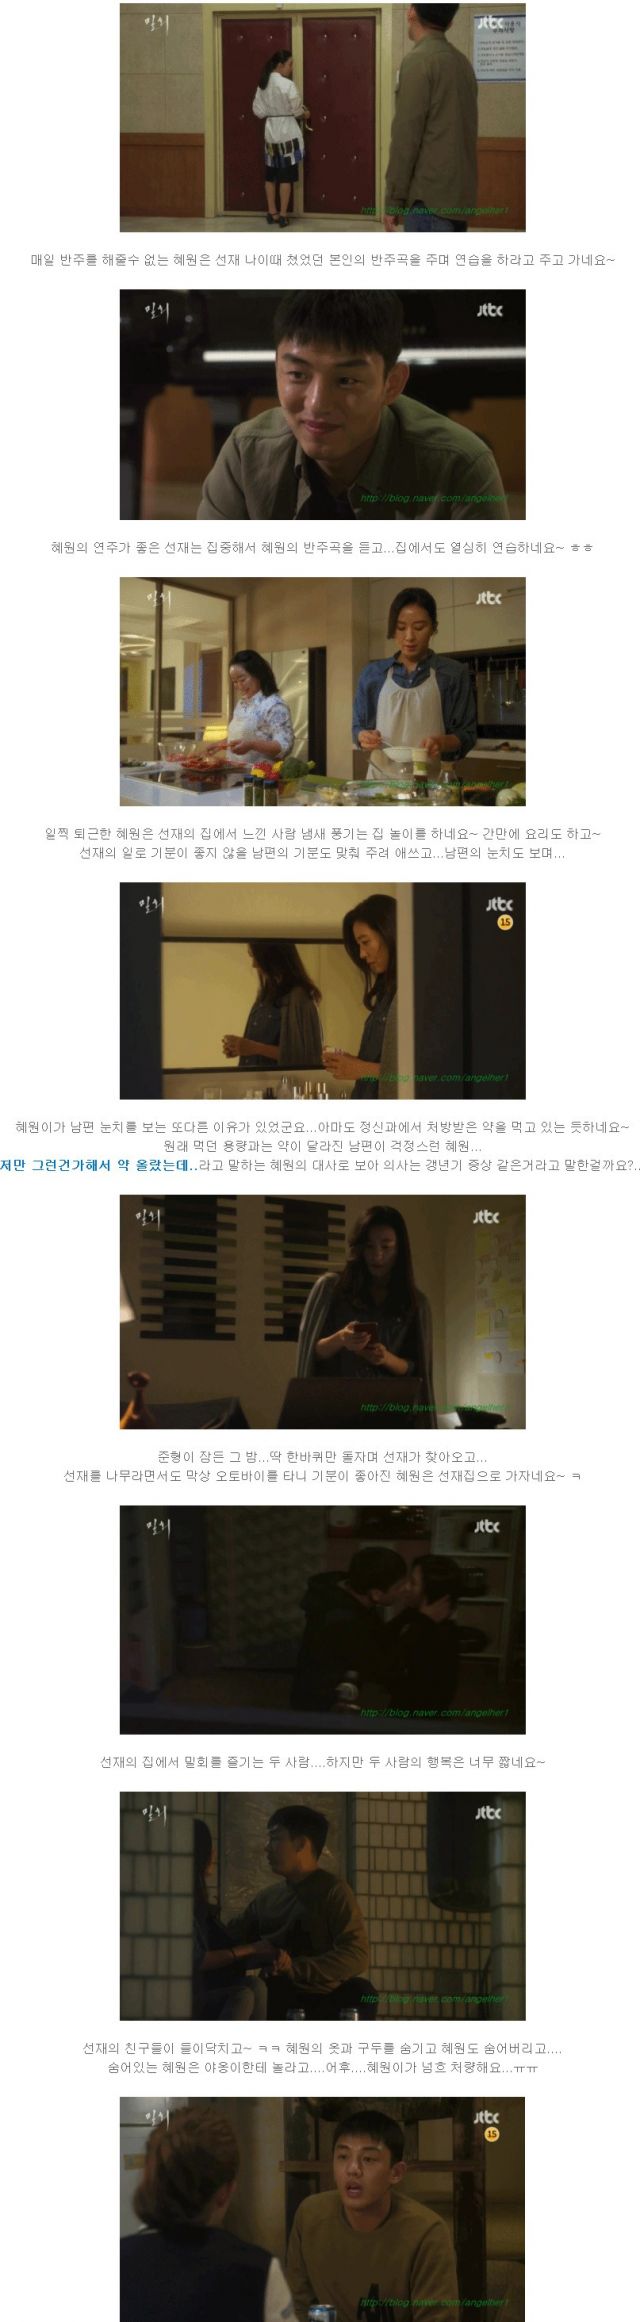 episode 9 captures for the Korean drama 'Secret Love Affair'